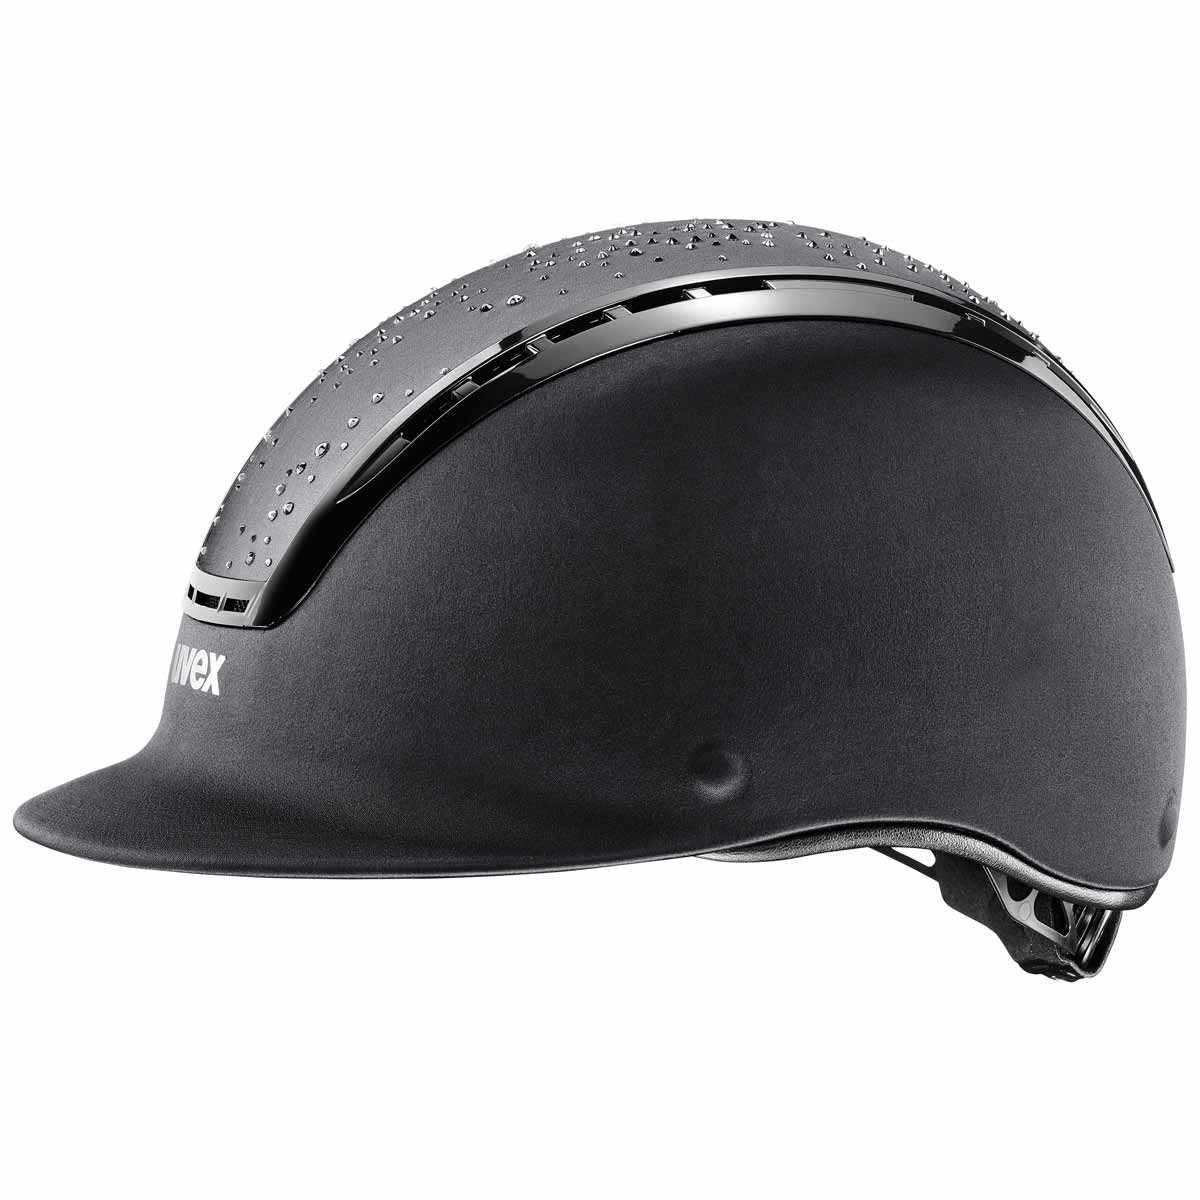 uvex suxxeed diamond riding helmet black XS/S